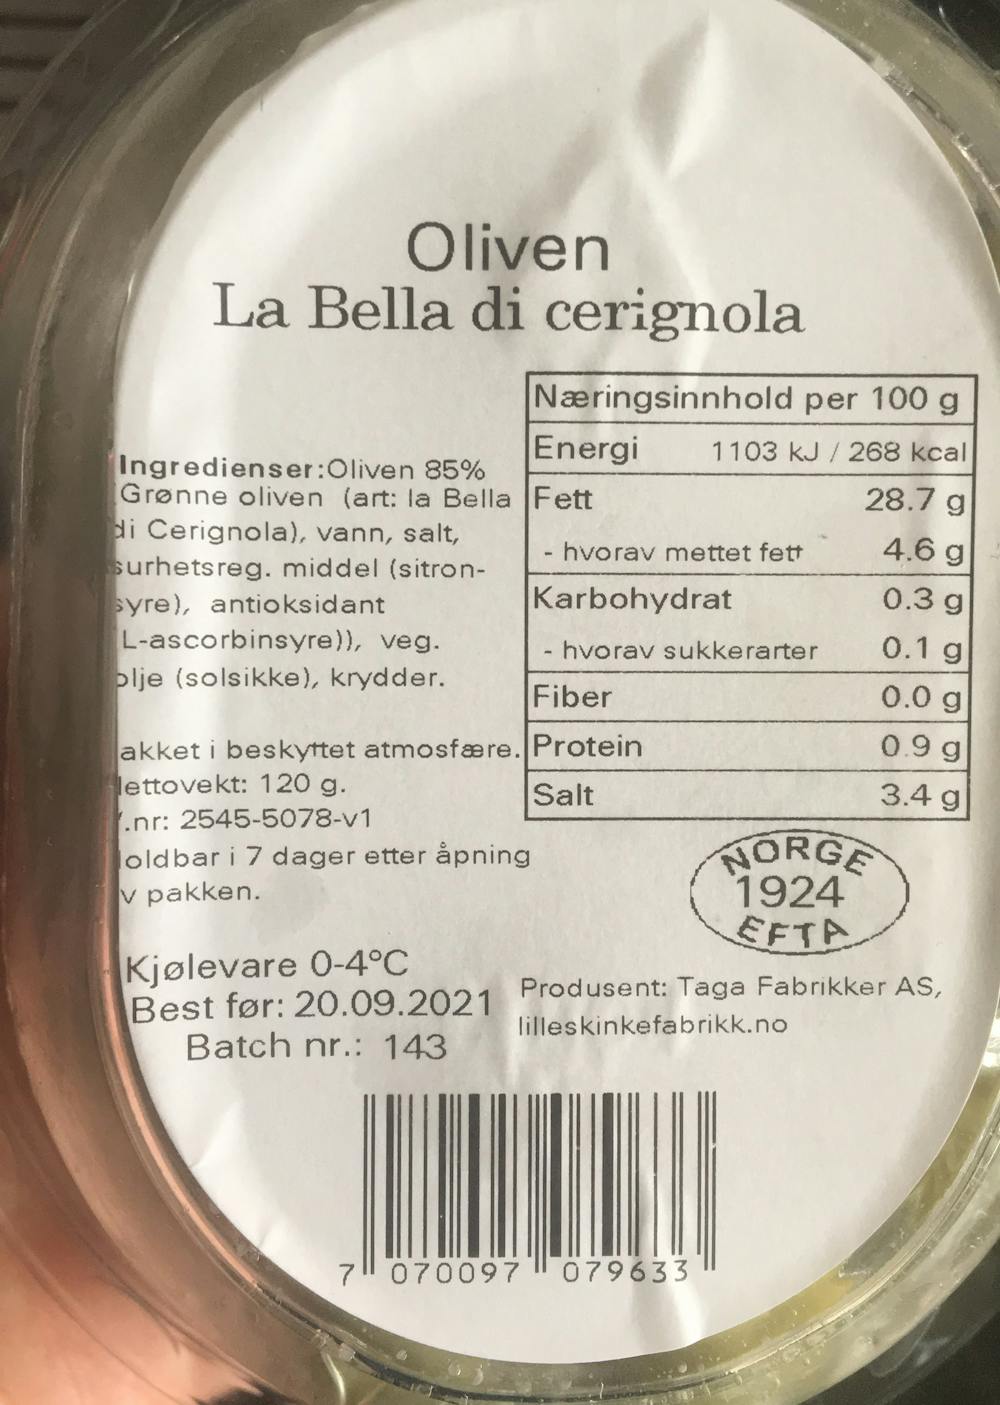 Ingrediensliste - Oliven la bella di cerignola, Lille skinke fabrikk